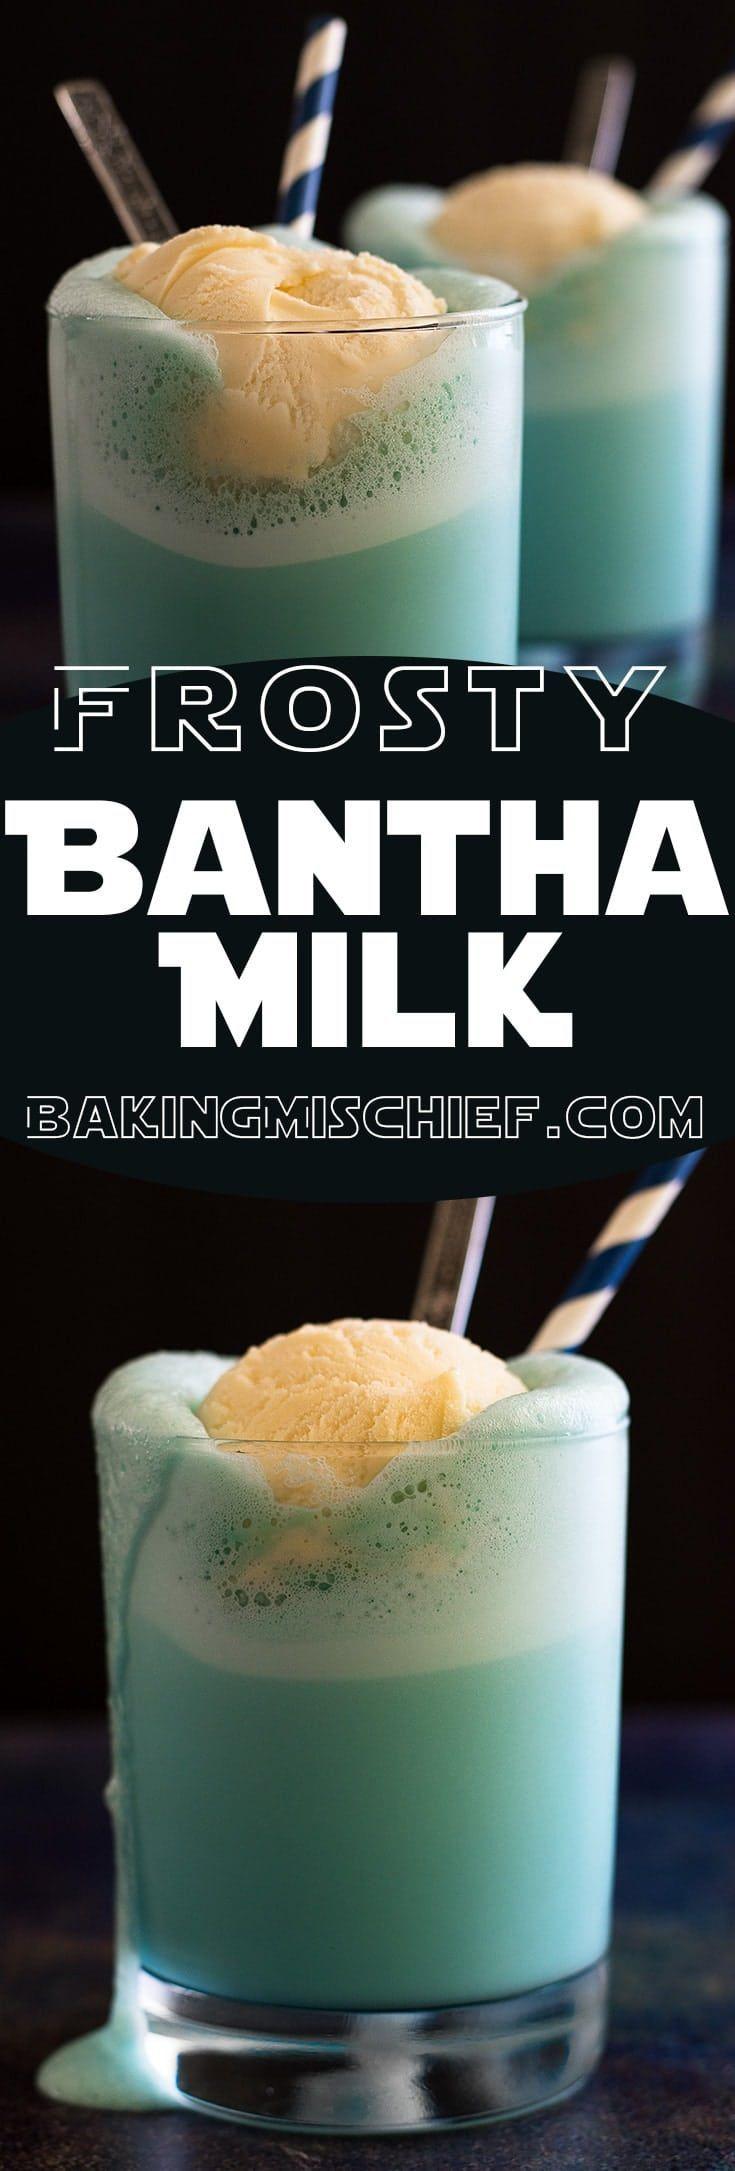 Wedding - Frosty Bantha Milk